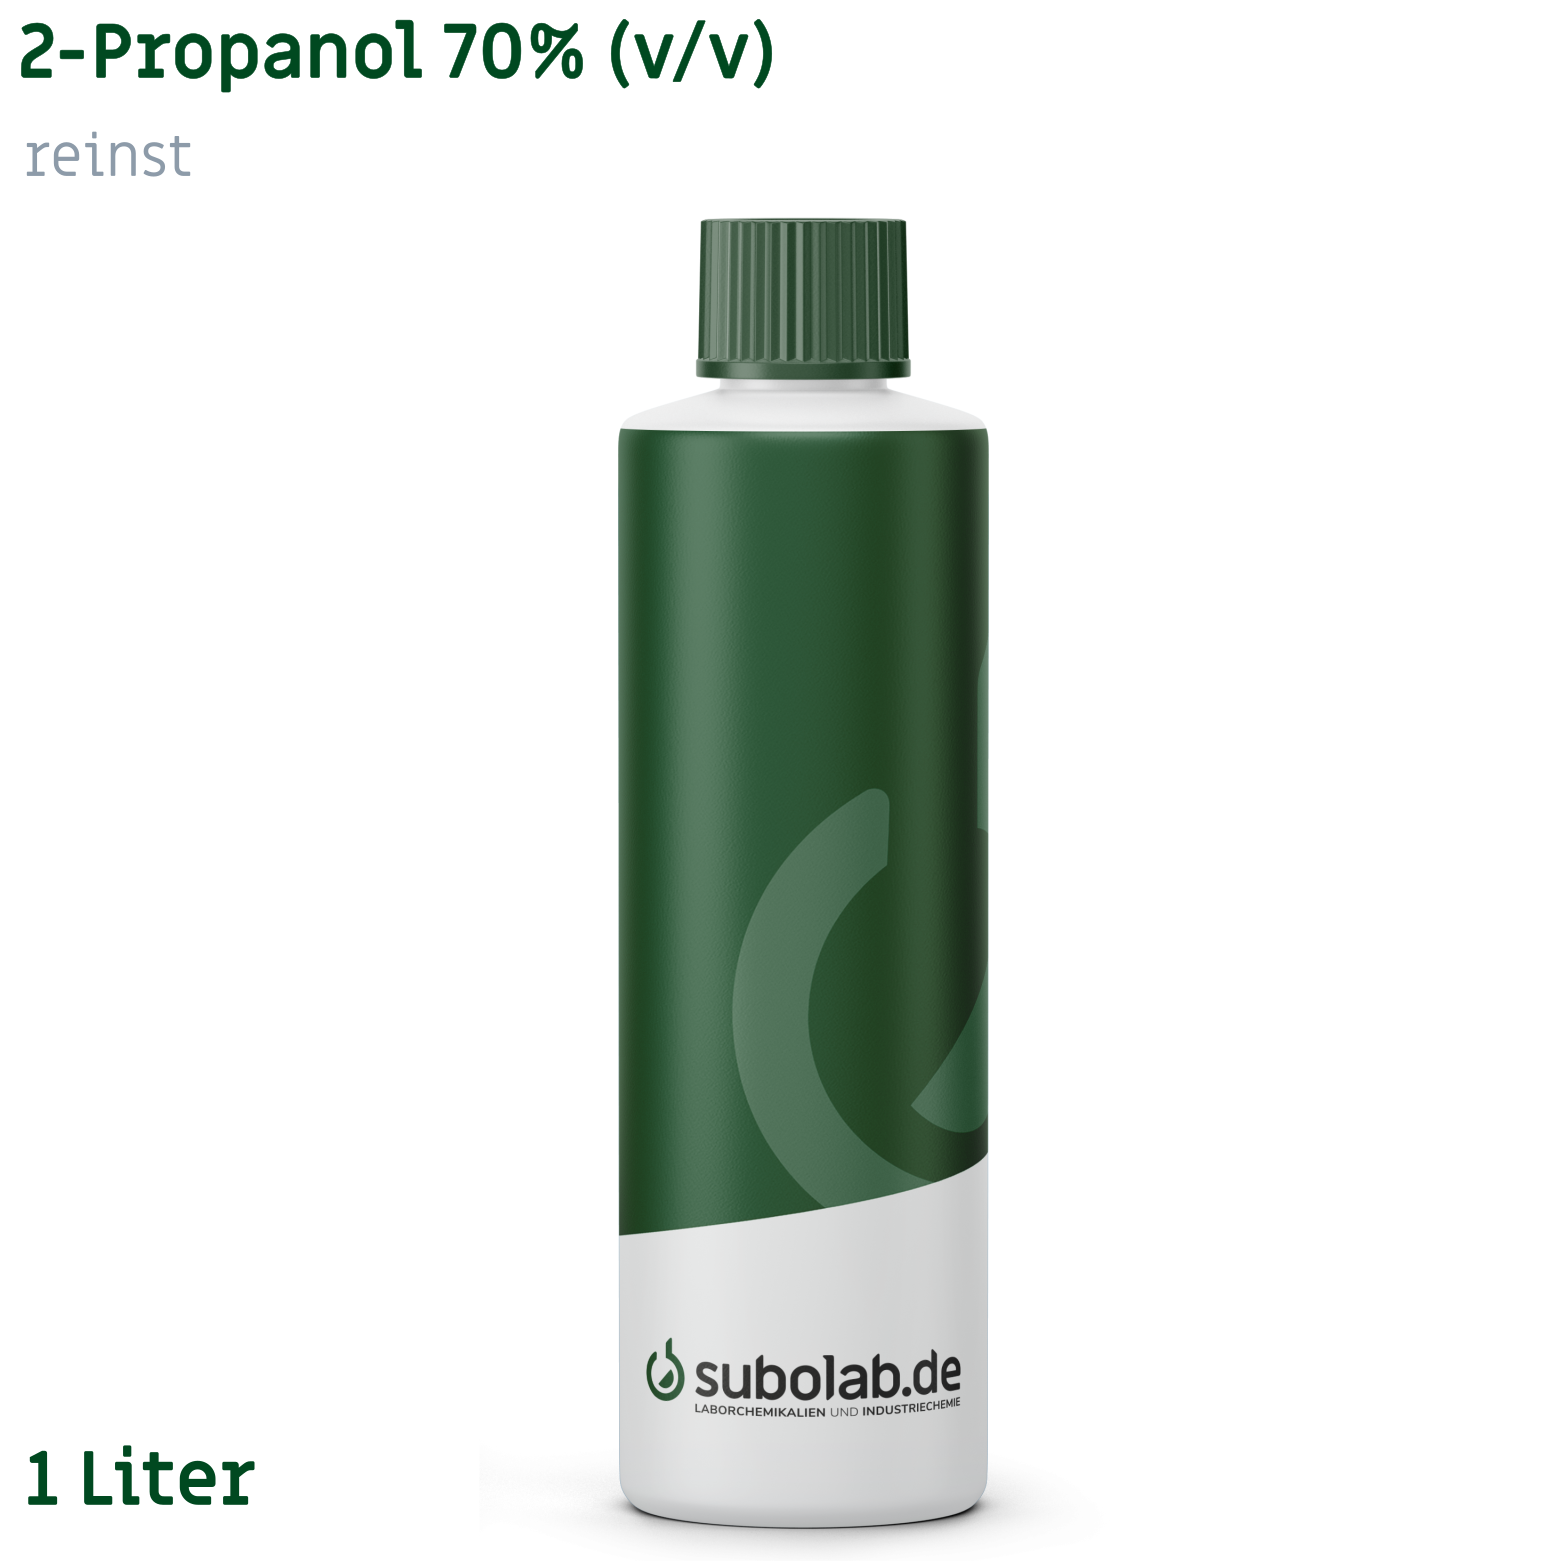 Bild von 2-Propanol 70% v/v reinst (1 Liter)